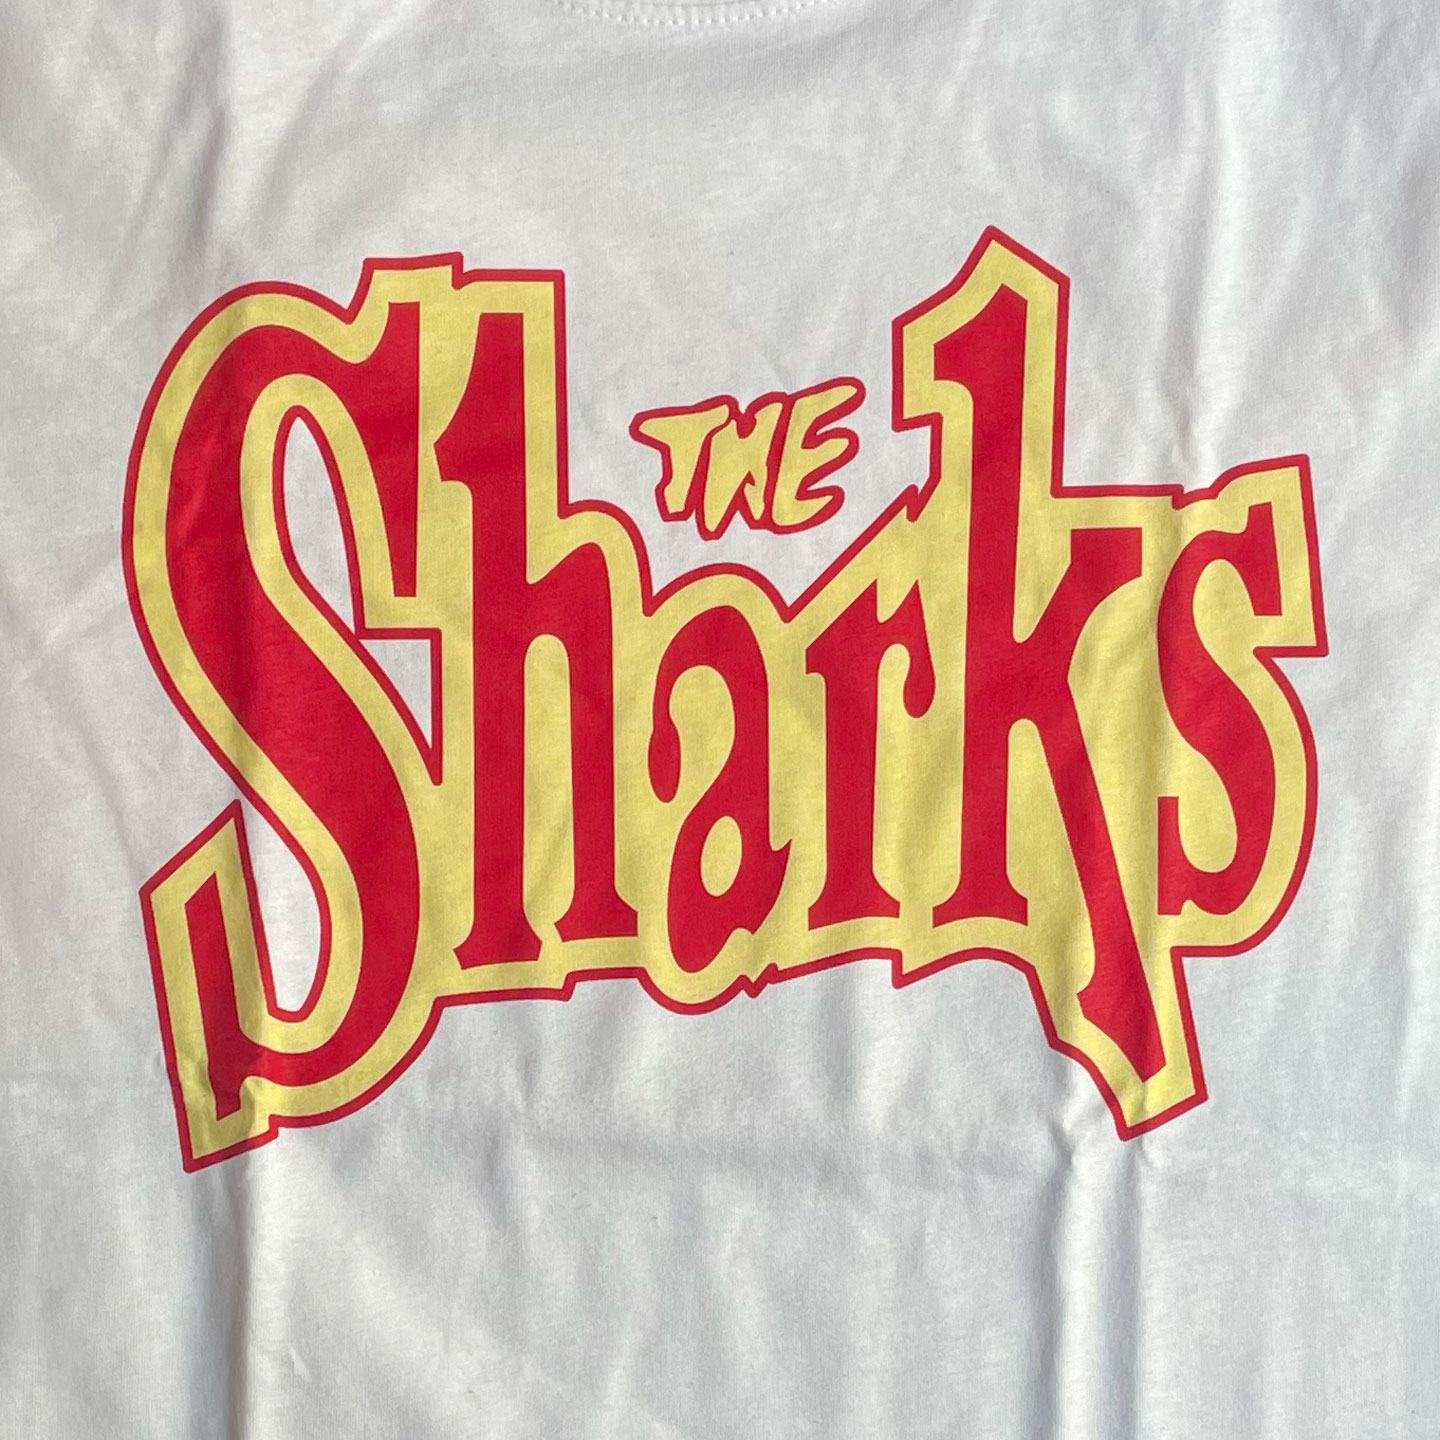 THE SHARKS Tシャツ LOGO オフィシャル！